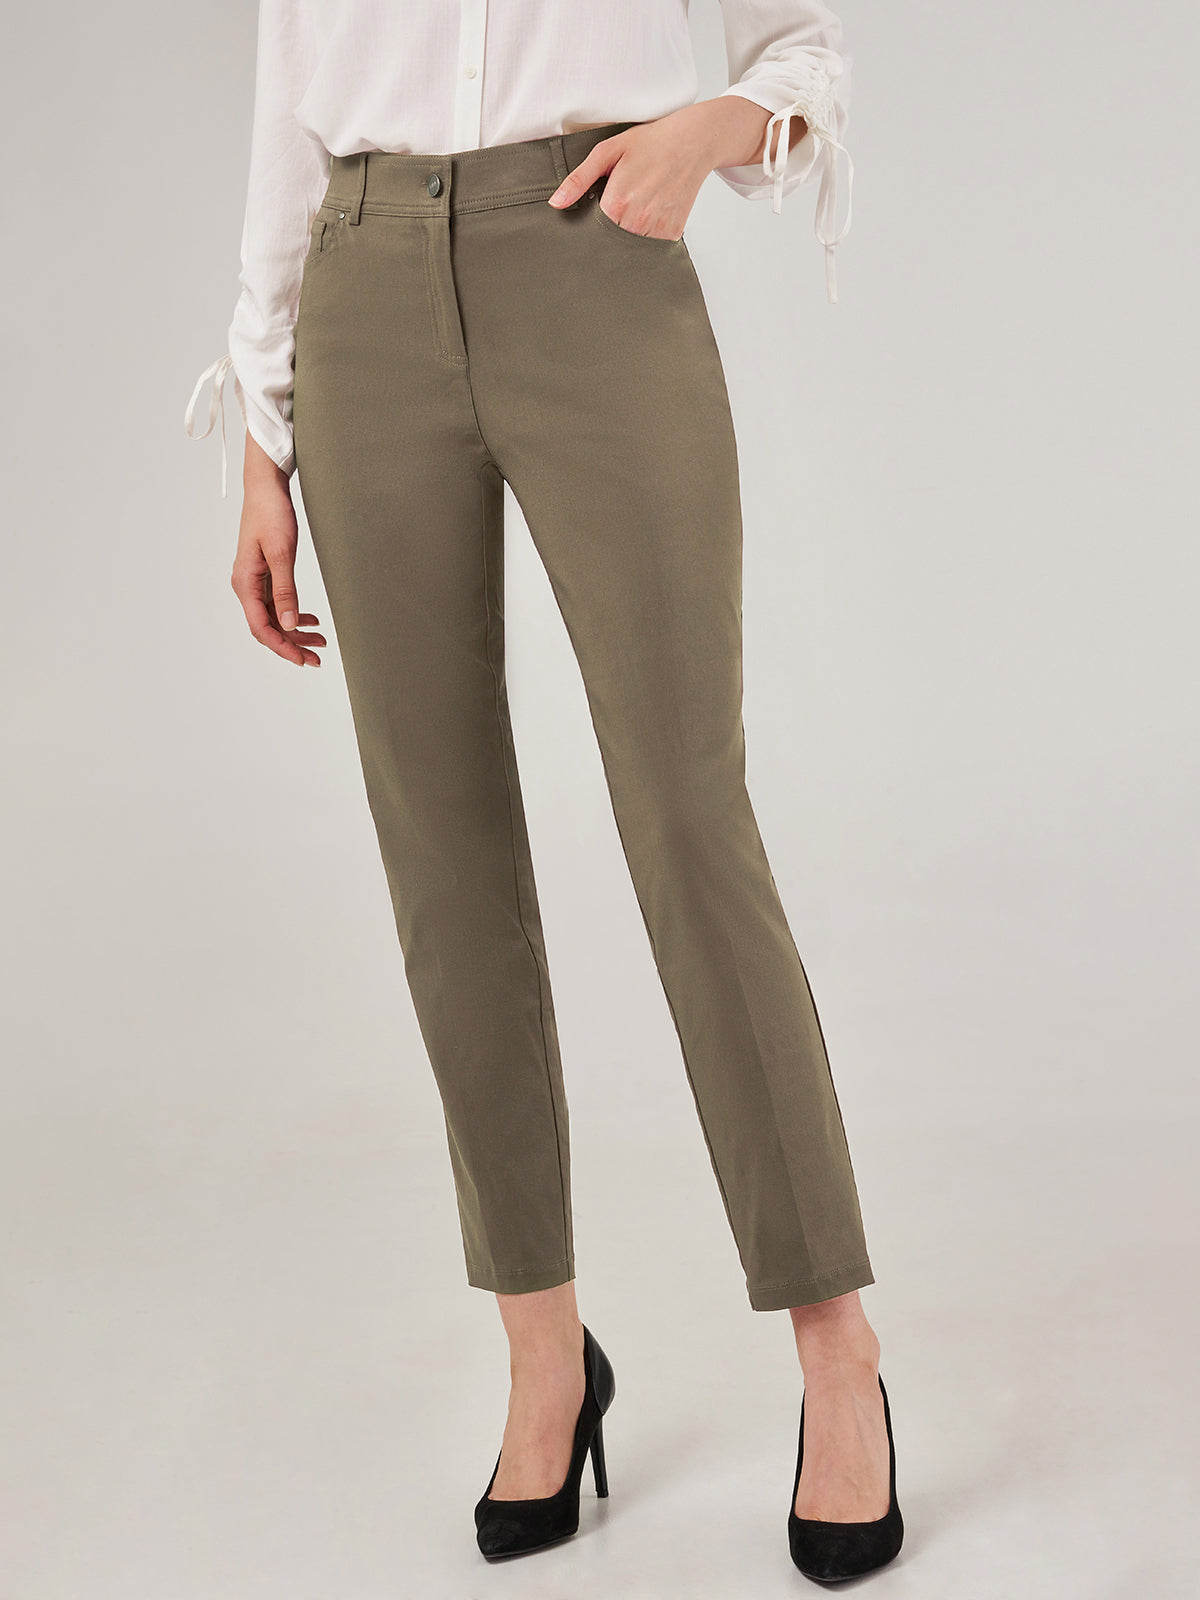 Five pocket trouser, Pants, Women's